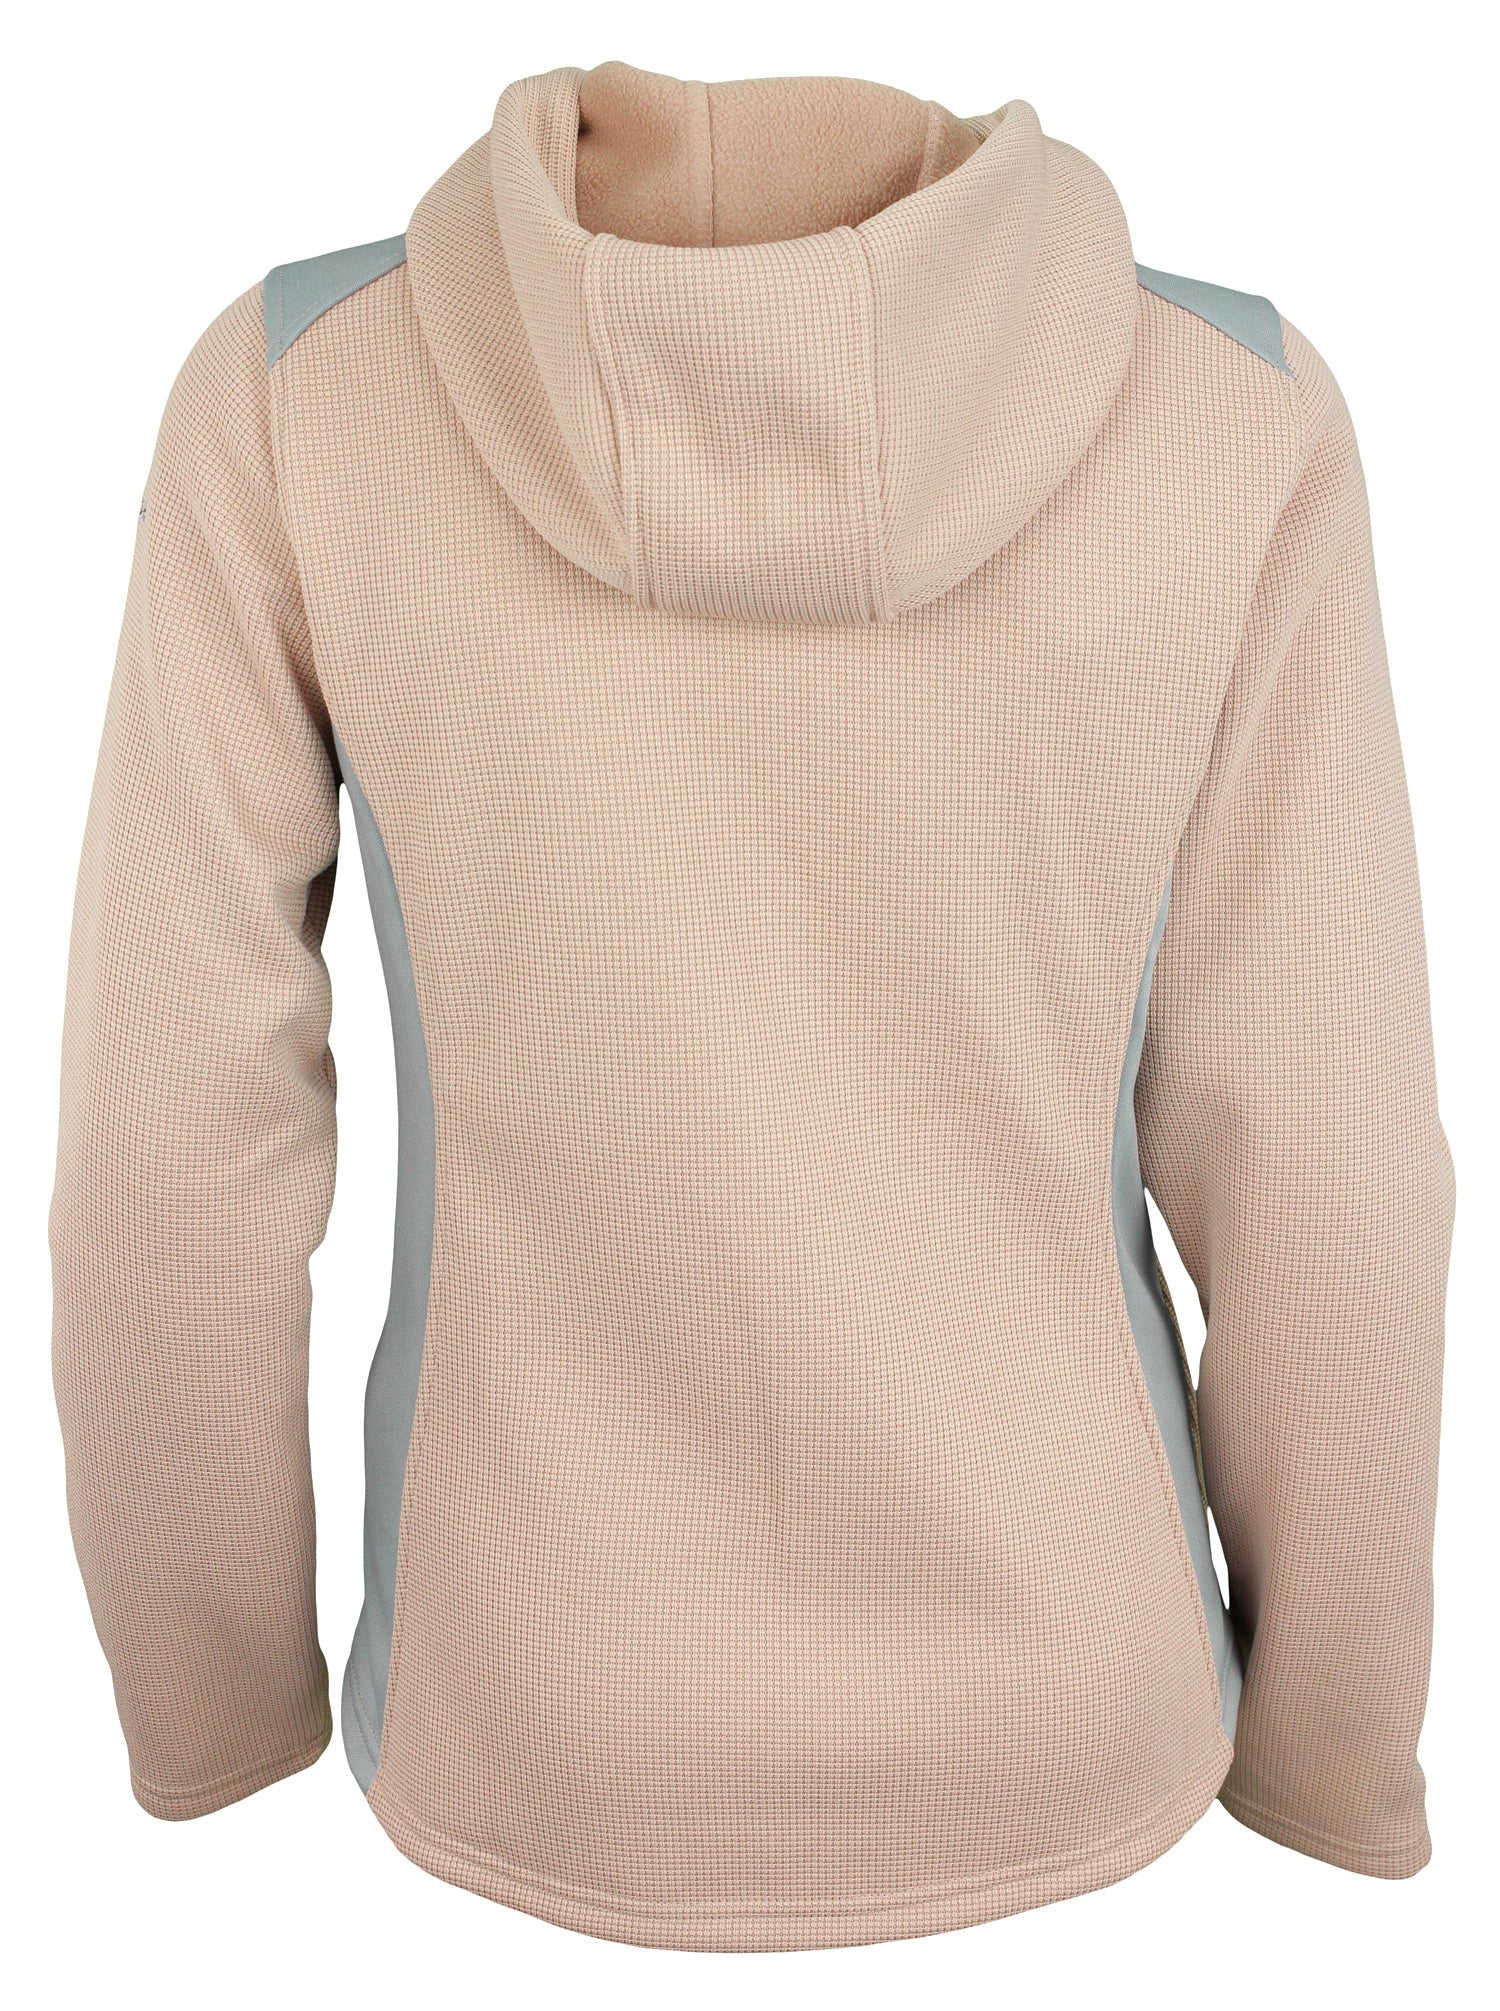 Spyder - ENCORE FULL ZIP Jacket for Women - Abyss Heather Size (Clothing)  Medium